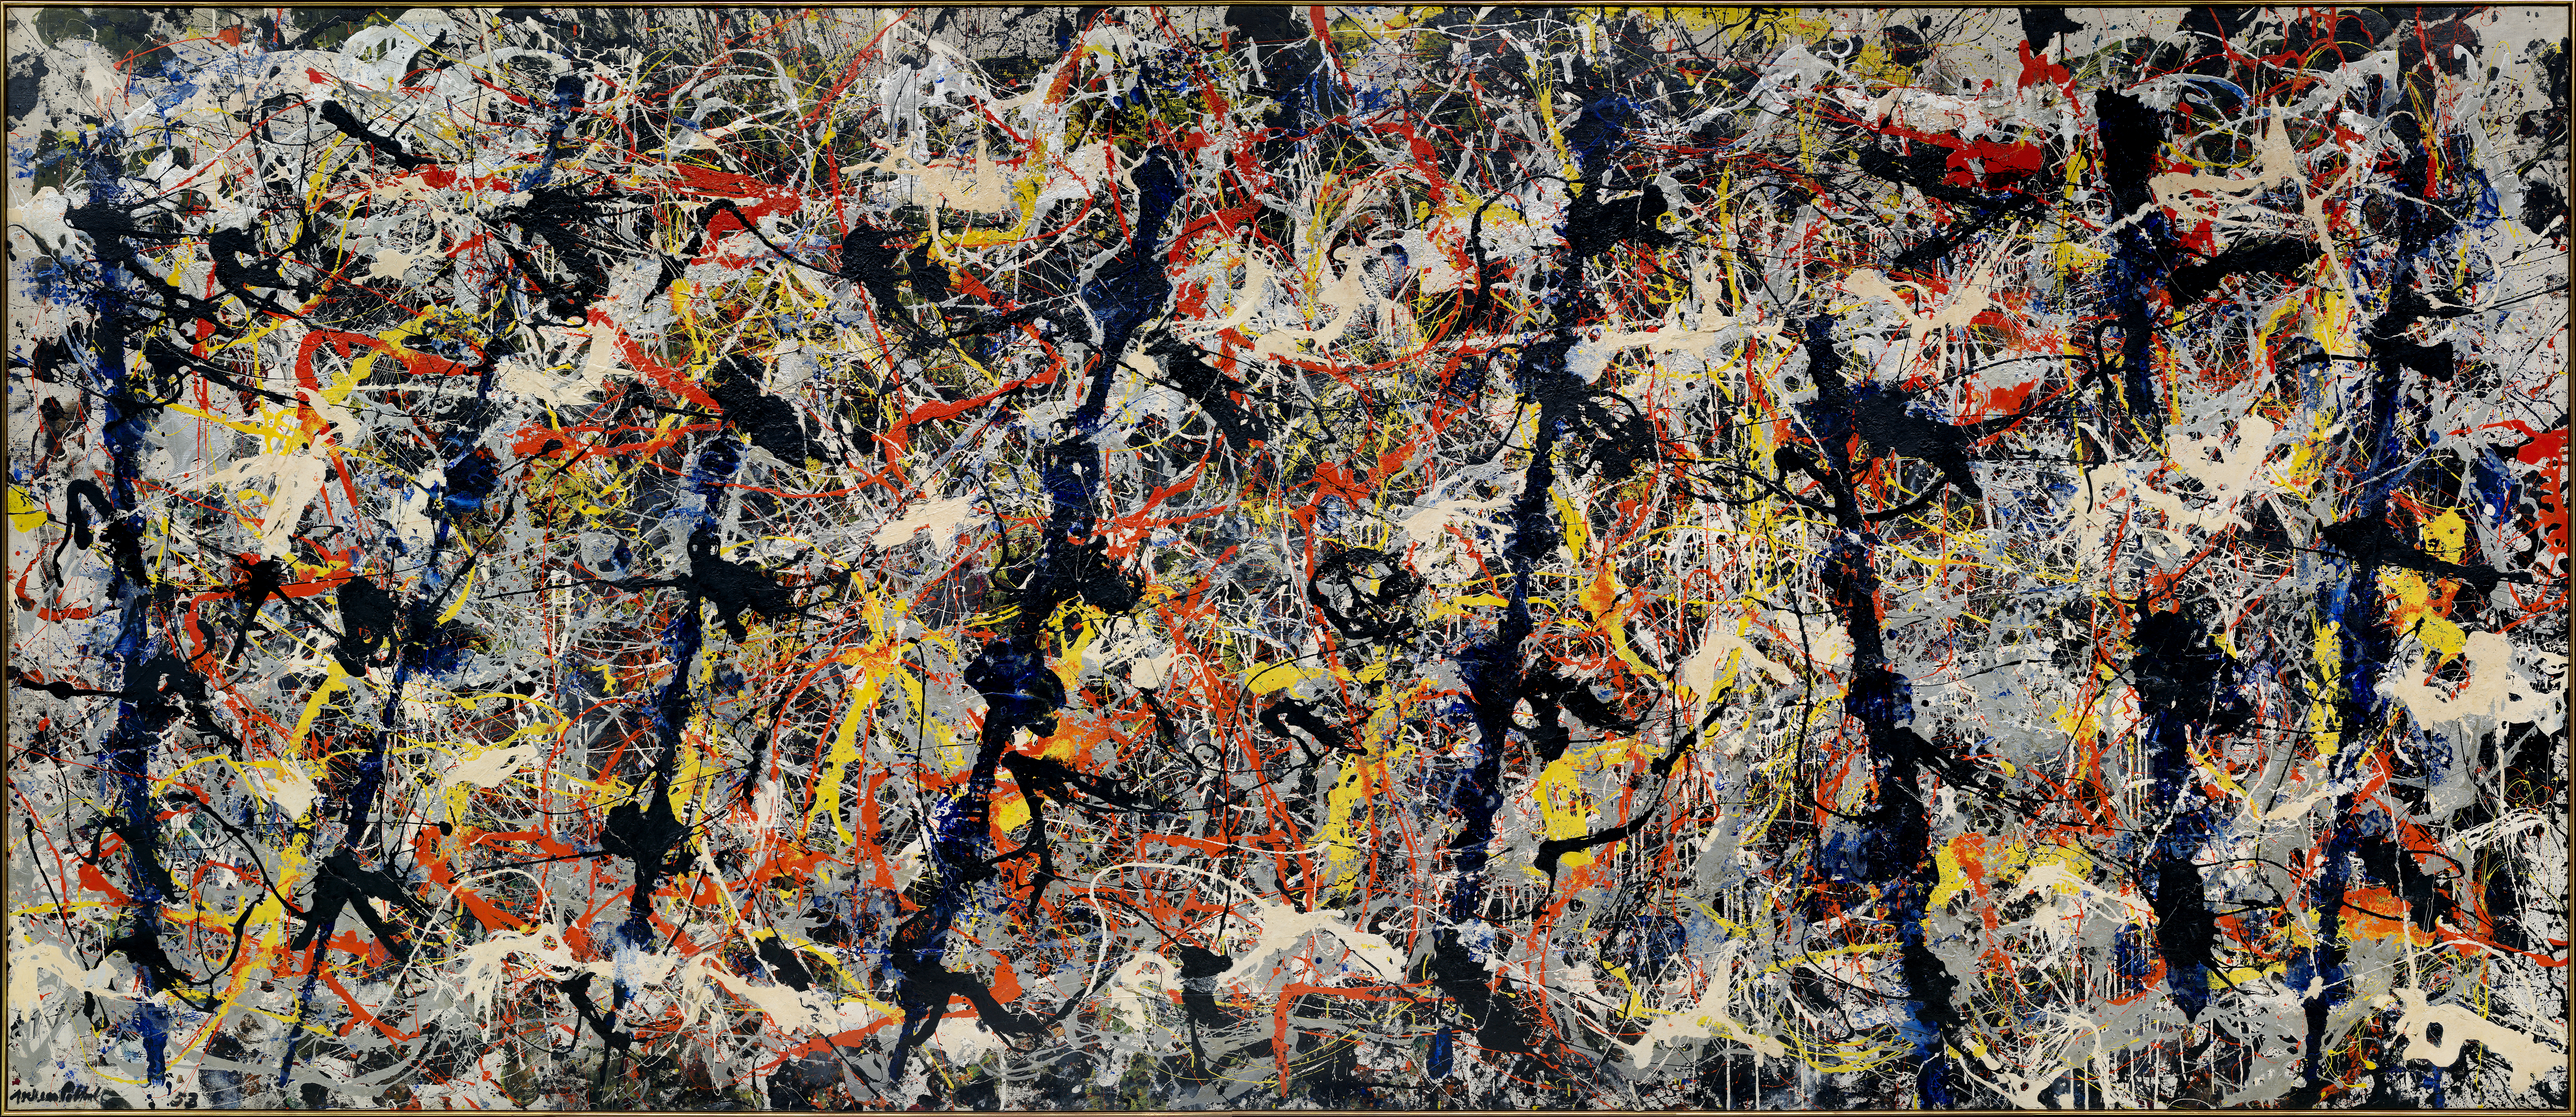 Blue Poles by Jackson Pollock.